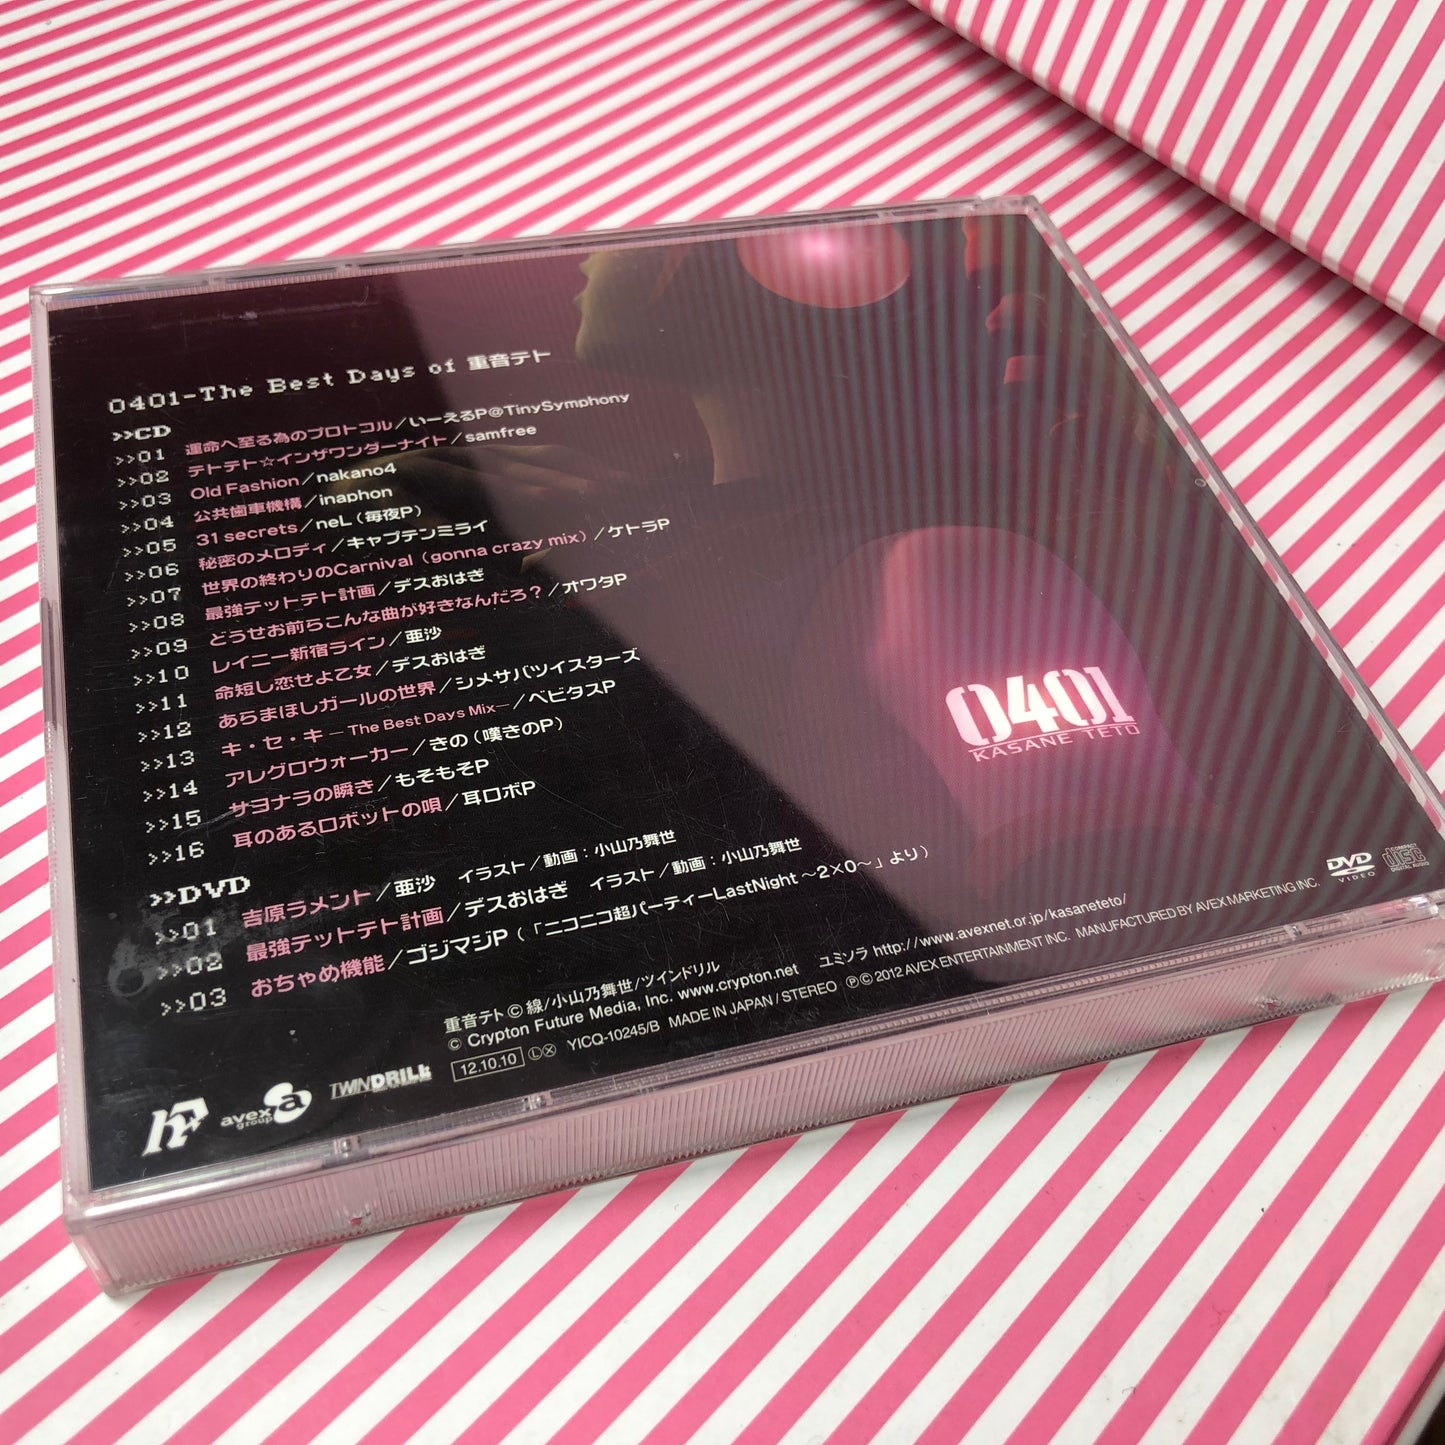 UTAU The Best Days of Kasane Teto [2 CD] Album CD (Used)